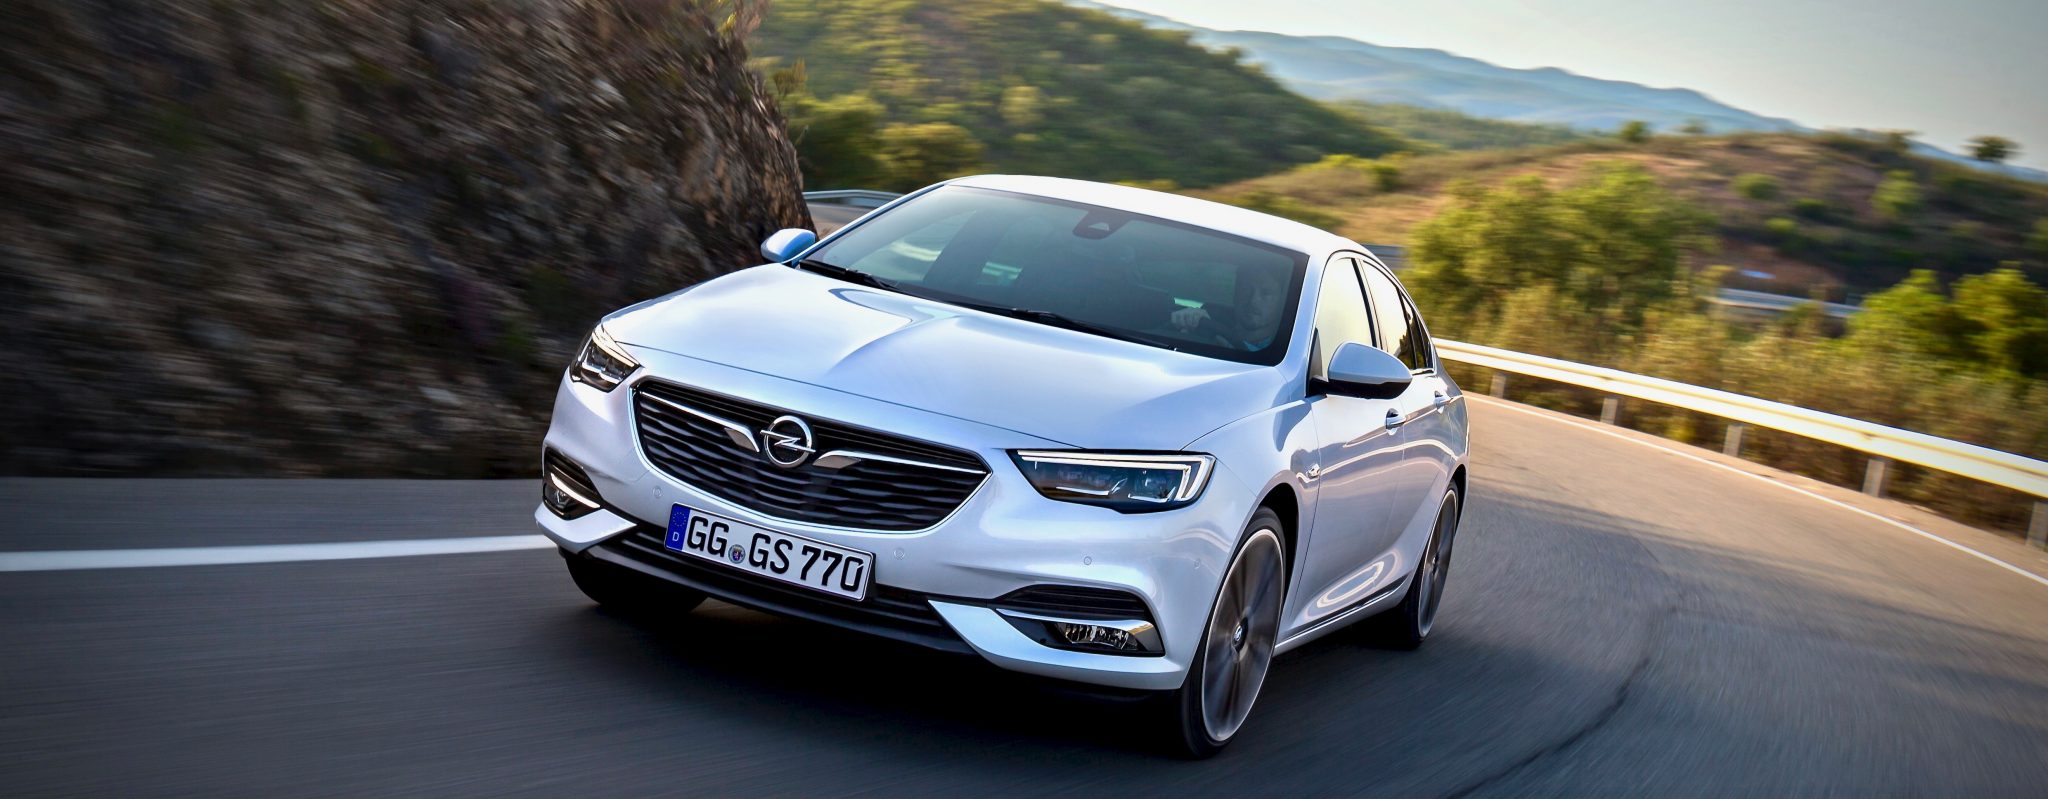 Insignia en carreteras reviradas - Opel Insignia Grand Sport 1.6 CDTI 136 CV